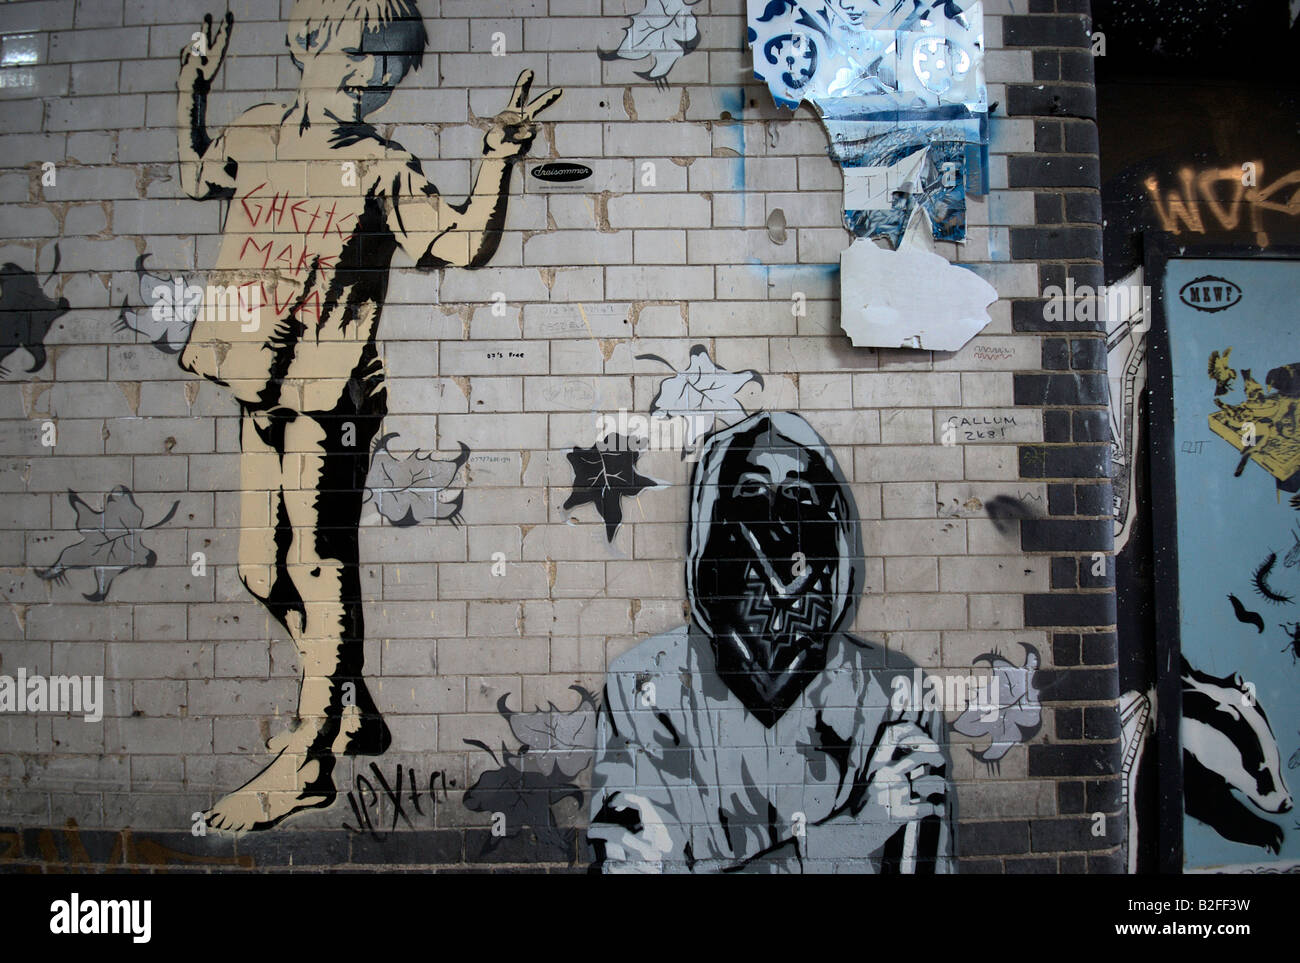 Cans Festival stencil grafitti artwork underneath Waterloo train station, London, UK. Stock Photo